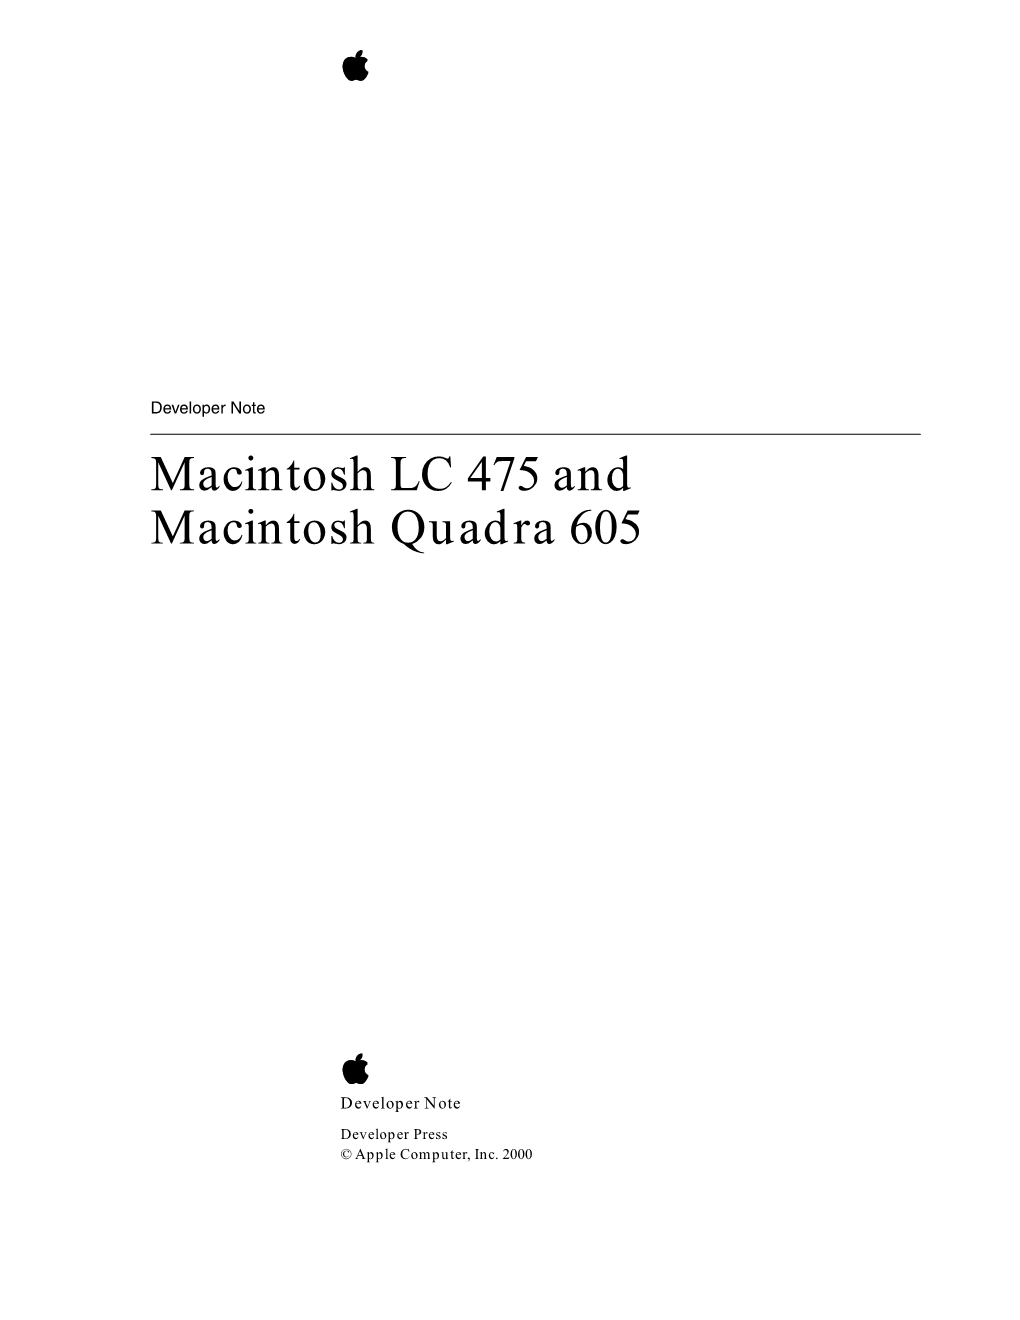 Macintosh LC 475 and Macintosh Quadra 605